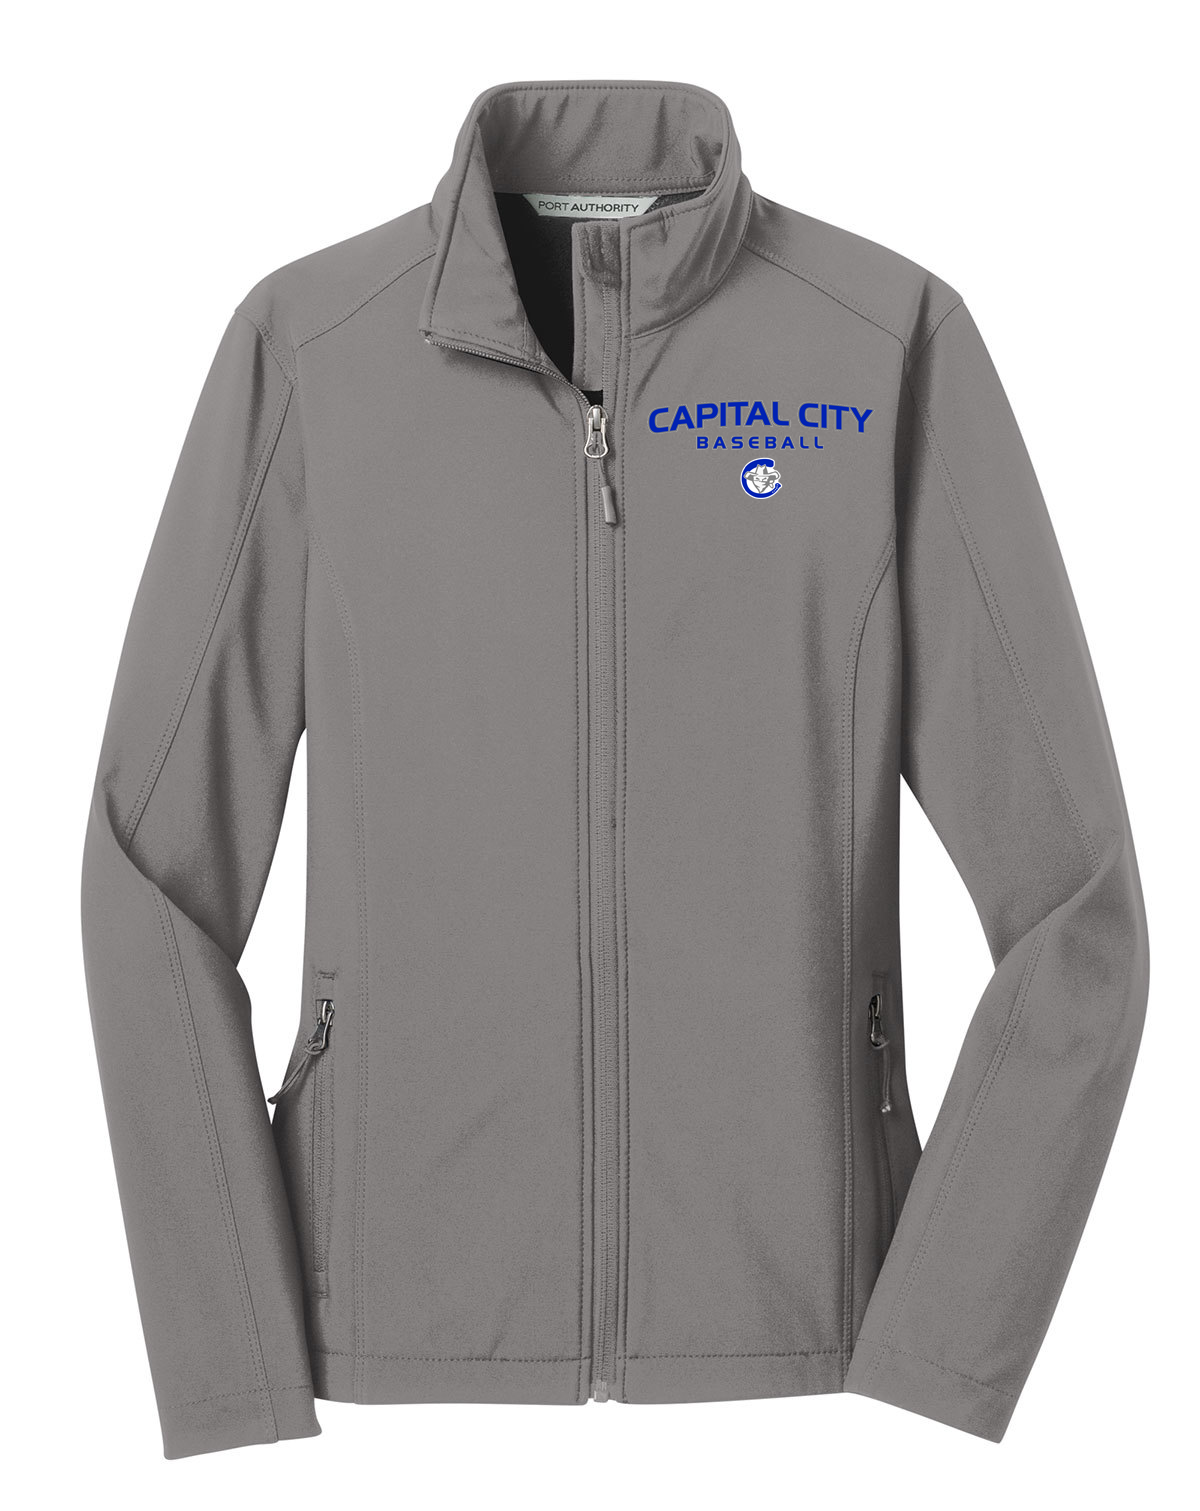 Capital City Baseball Women's Soft Shell Jacket